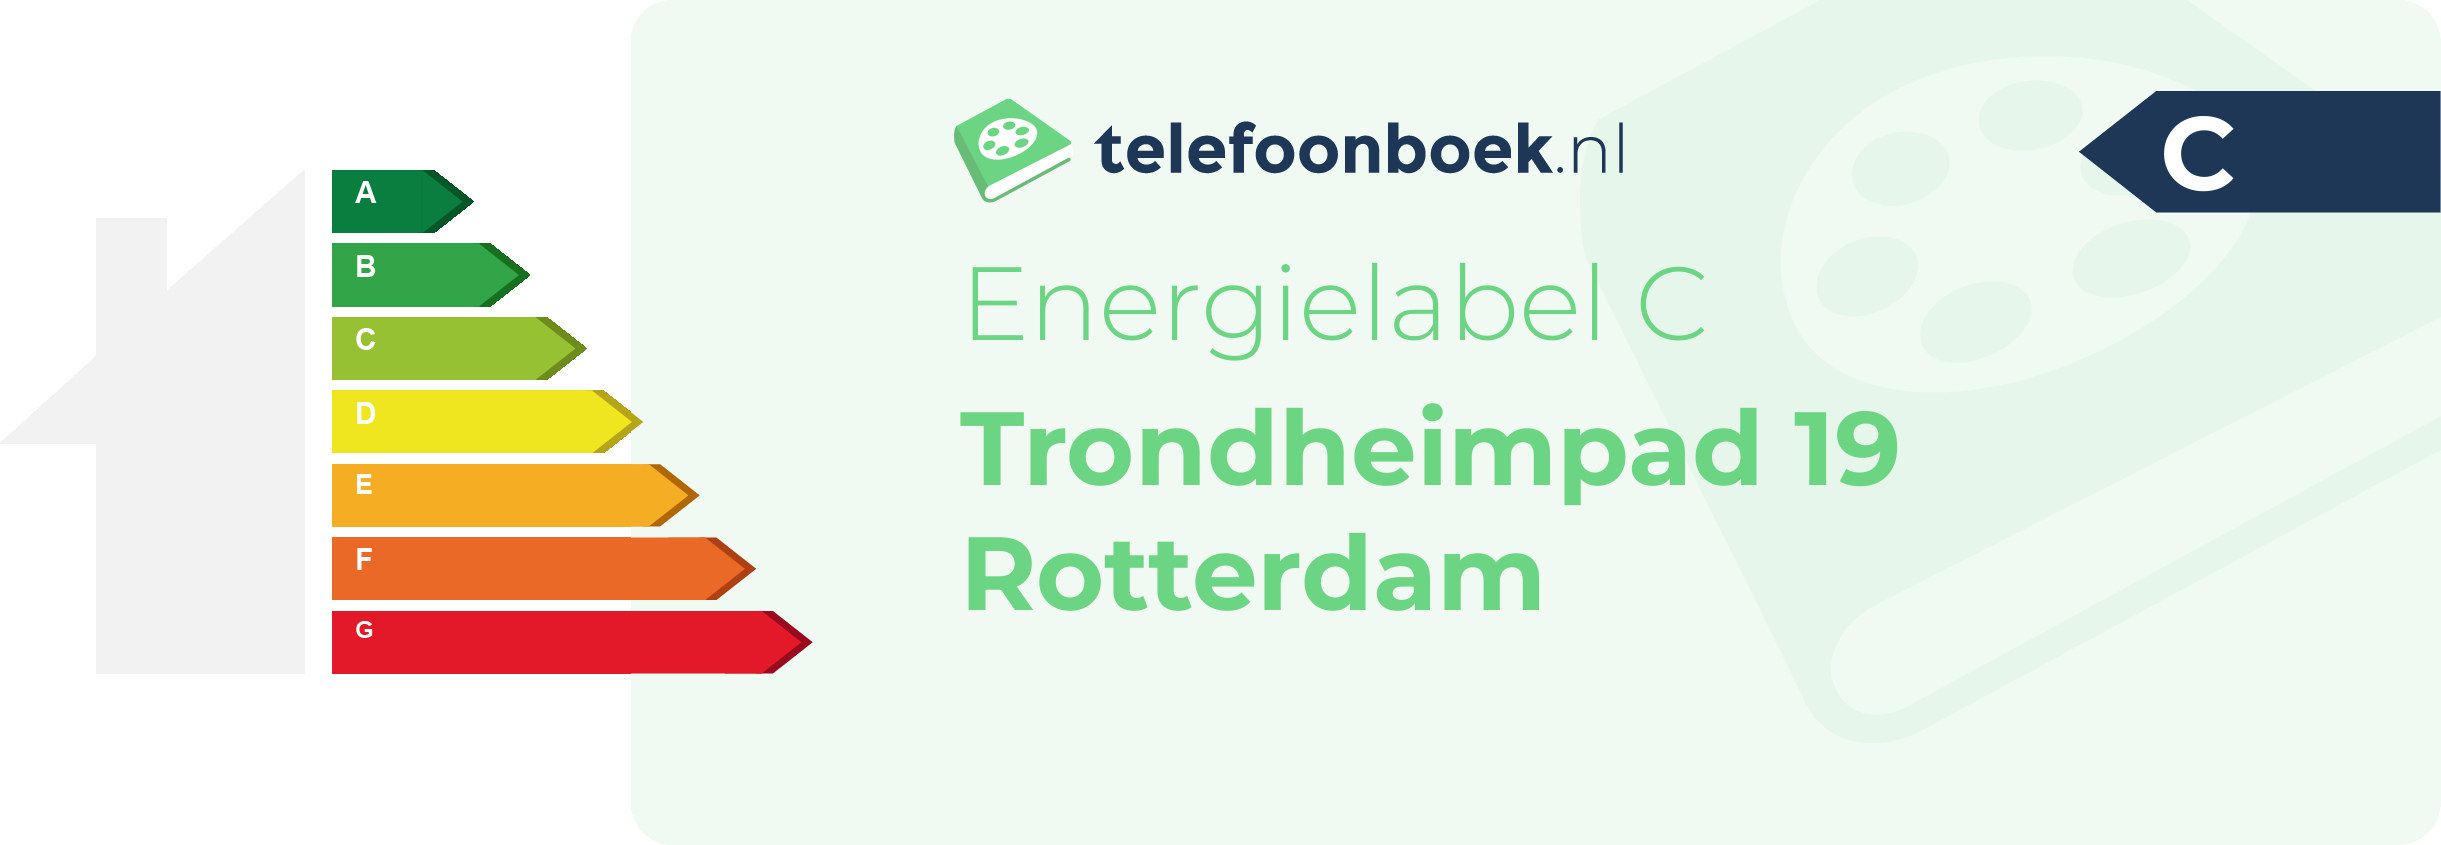 Energielabel Trondheimpad 19 Rotterdam